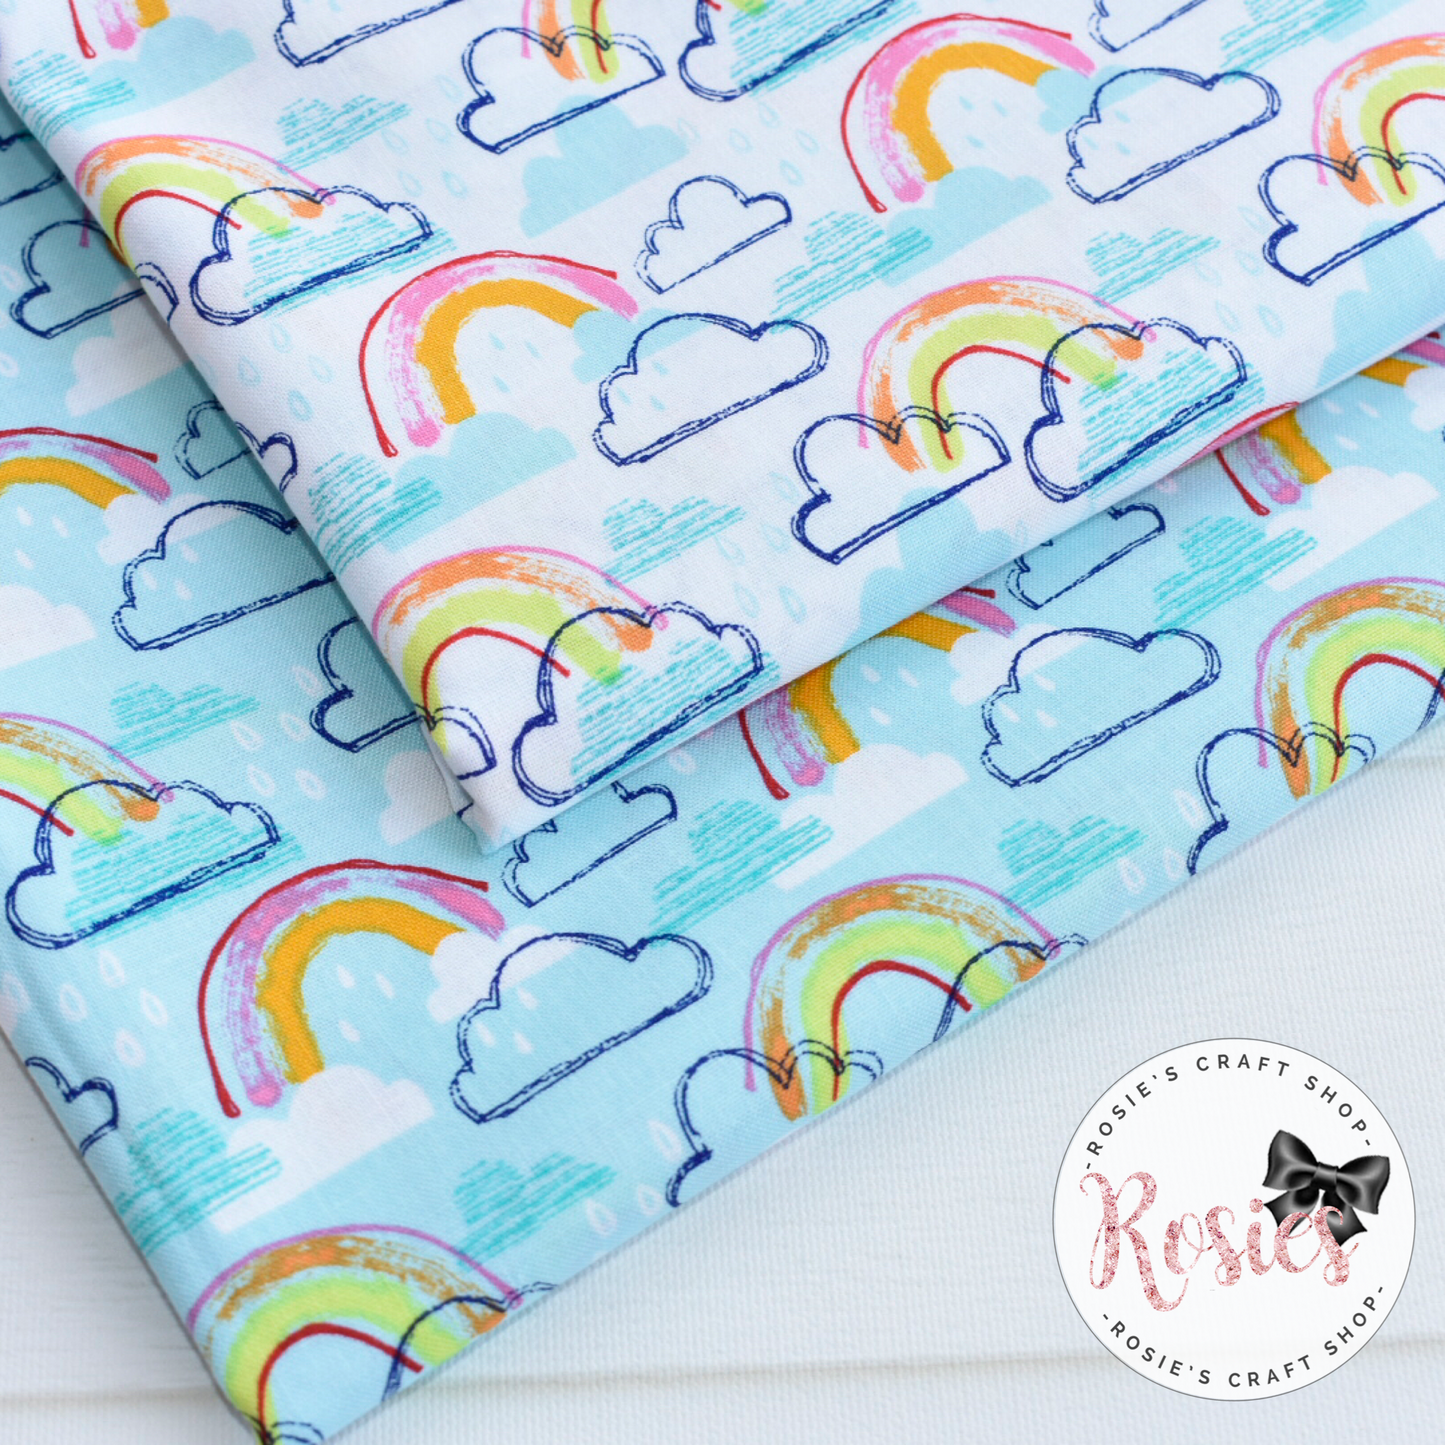 Turquoise Rainbow Jubilee - Rainbow Kids by Michael Miller 100% Cotton Fabric - Rosie's Craft Shop Ltd